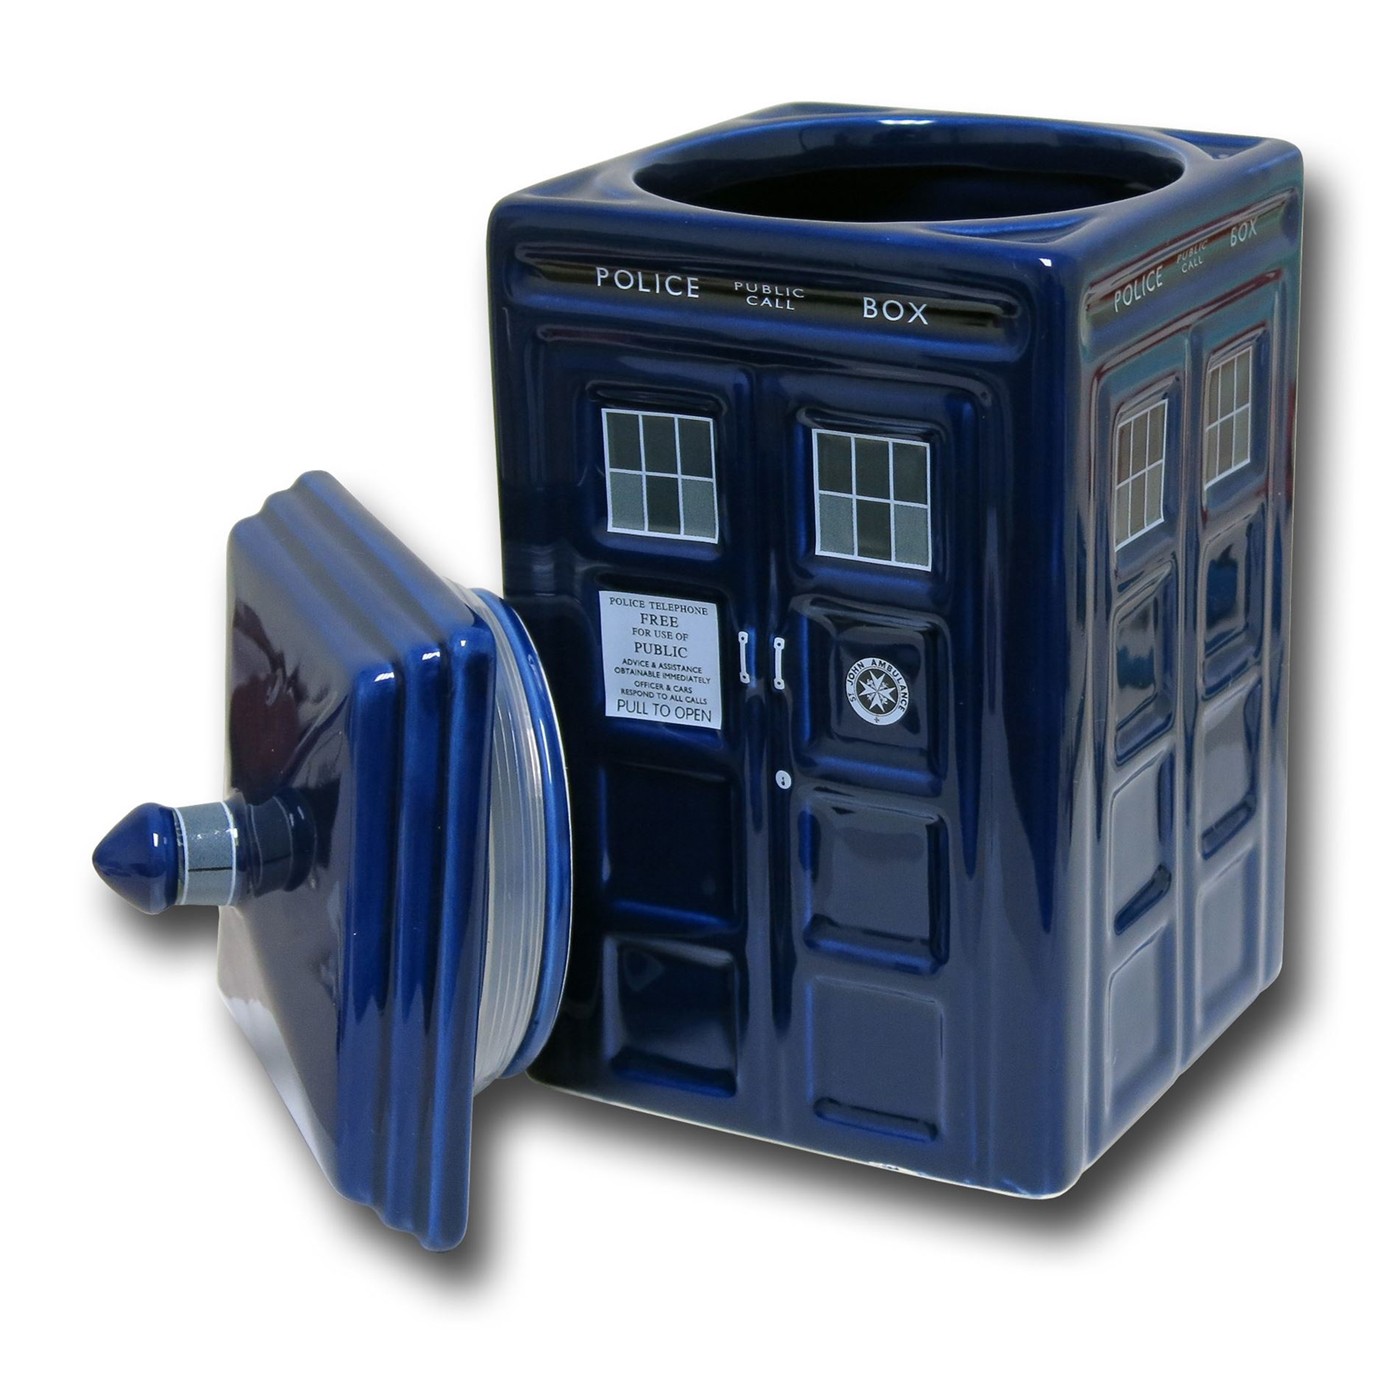 Doctor Who Tardis Cookie Jar